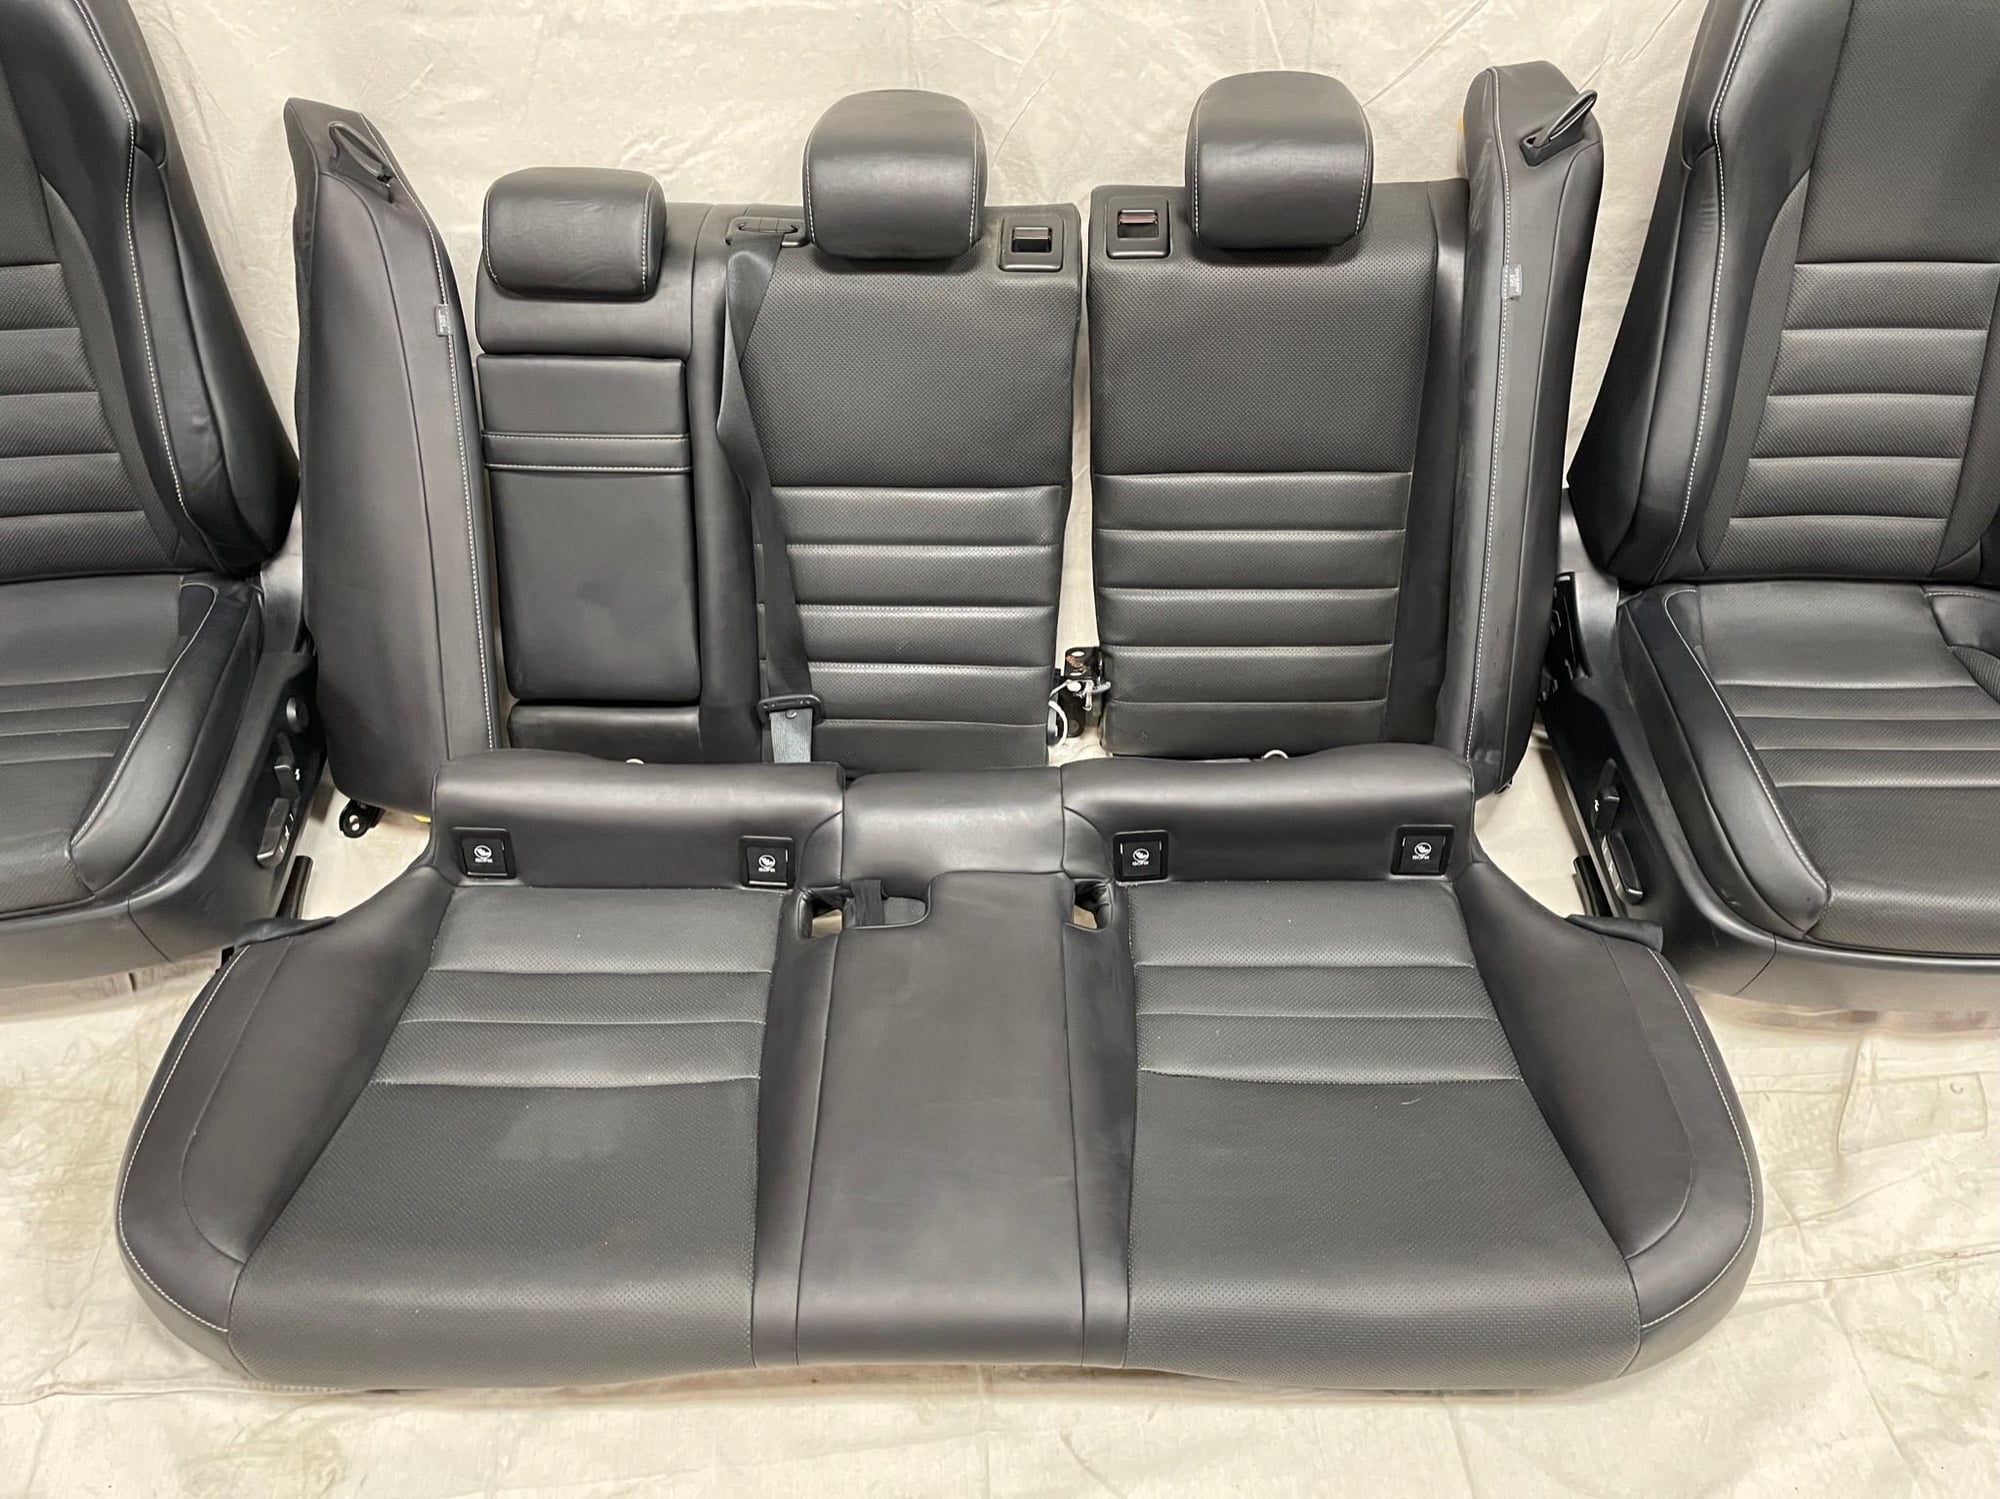 Interior/Upholstery - 2014-2020 Lexus 3 IS Black F Sport Interior Set - Used - 2014 to 2020 Lexus IS - Arlington Heights, IL 60004, United States